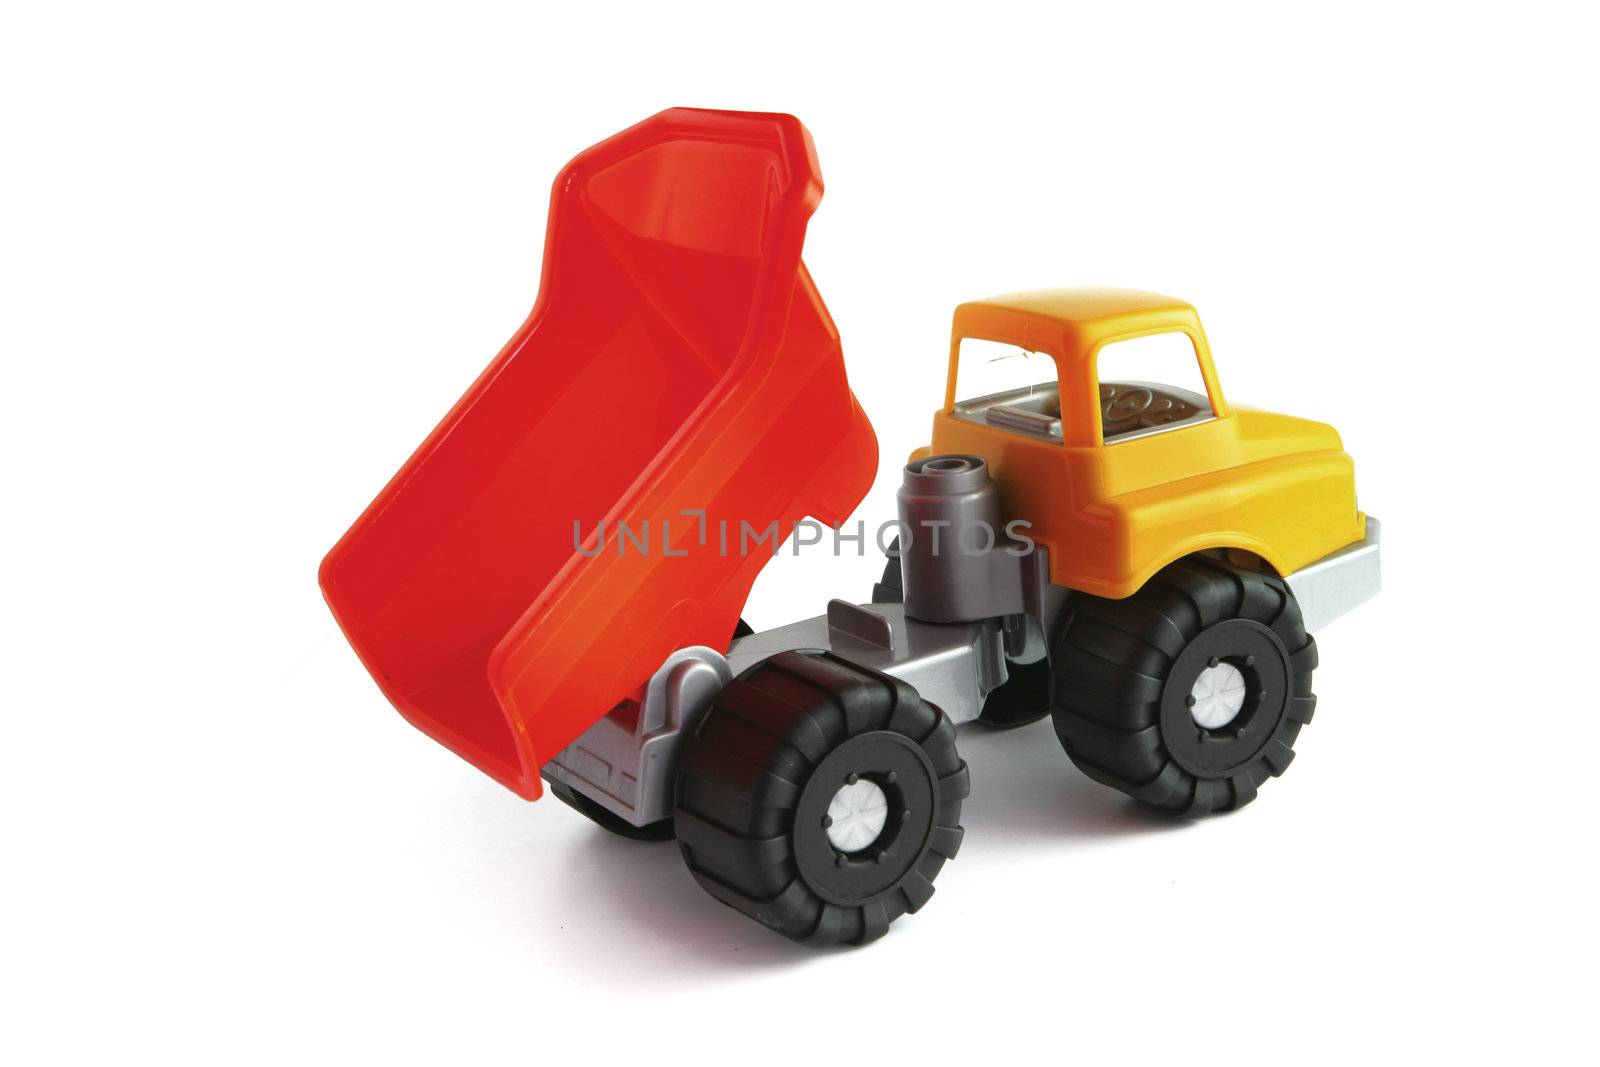 Toy dumper truck